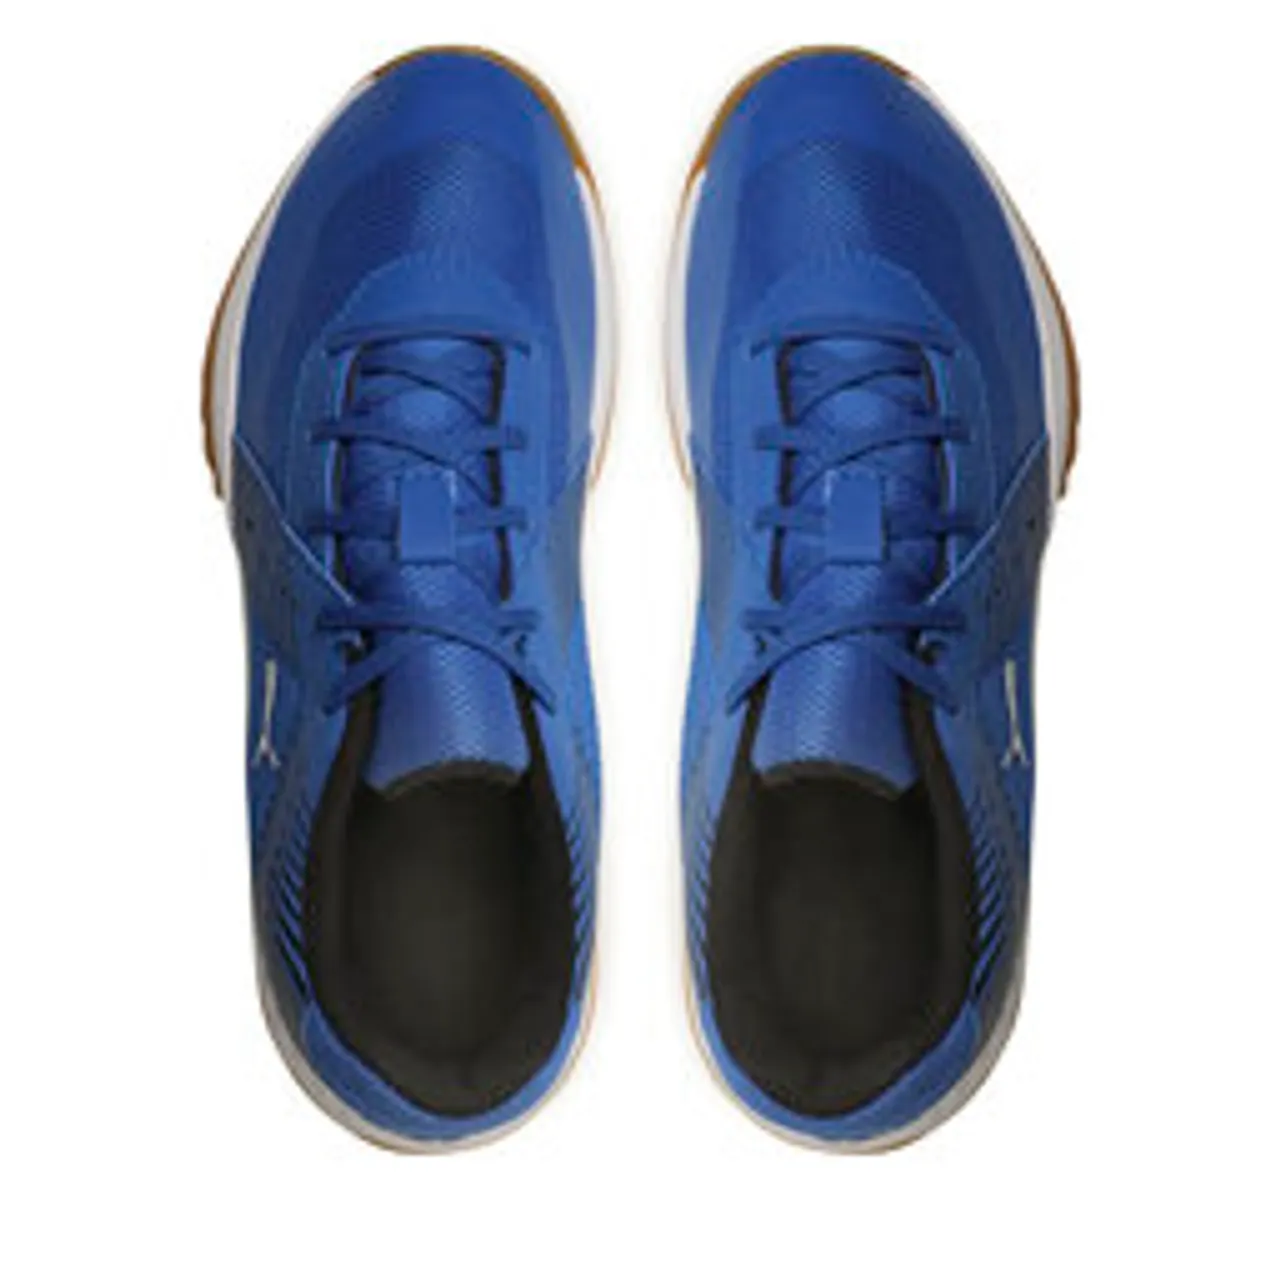 Schuhe Puma Varion Jr 10658506 Blau